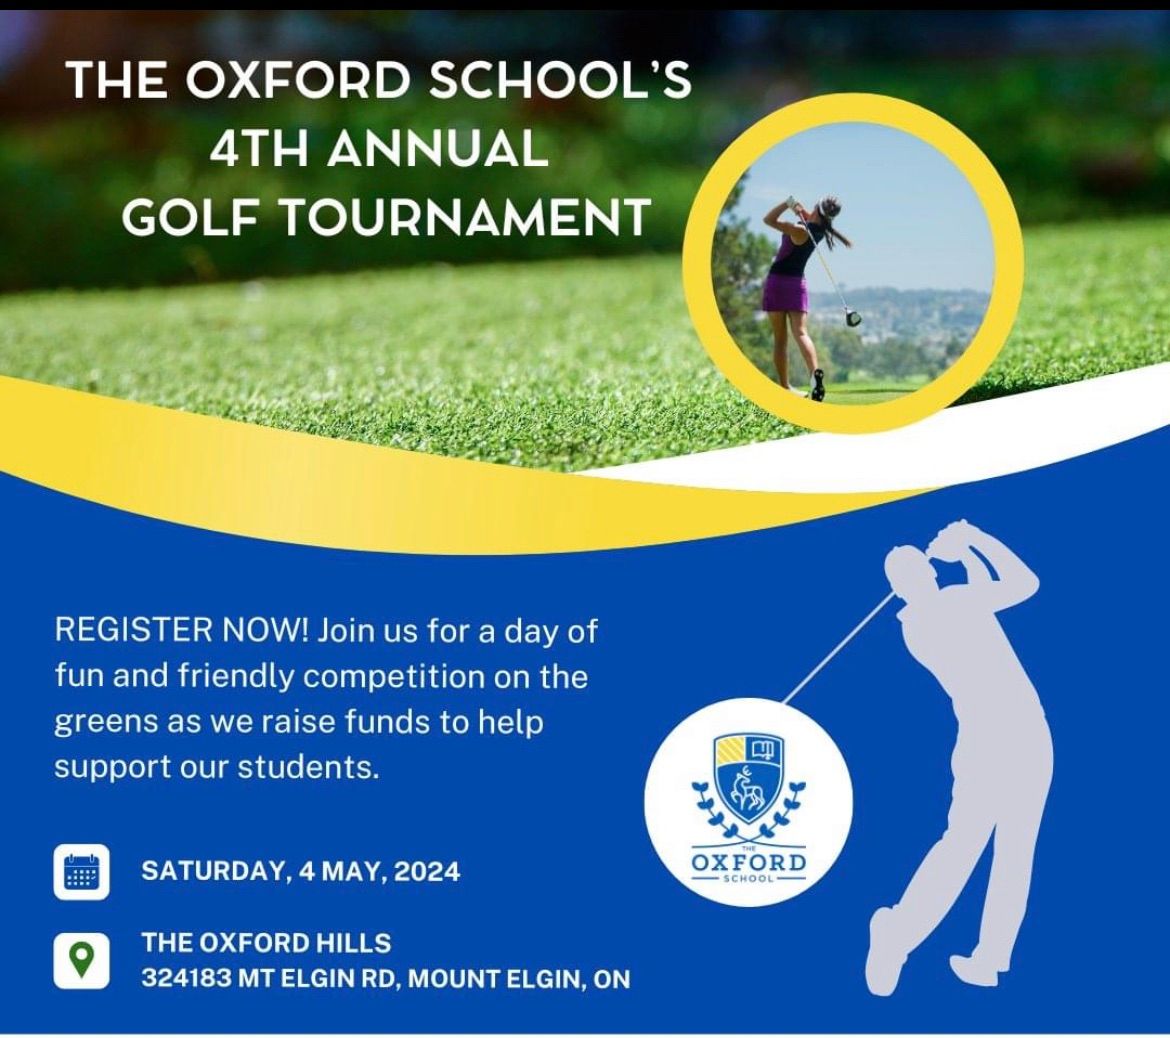 Heart FM presents The Oxford School's 4th Annual Golf Tournament